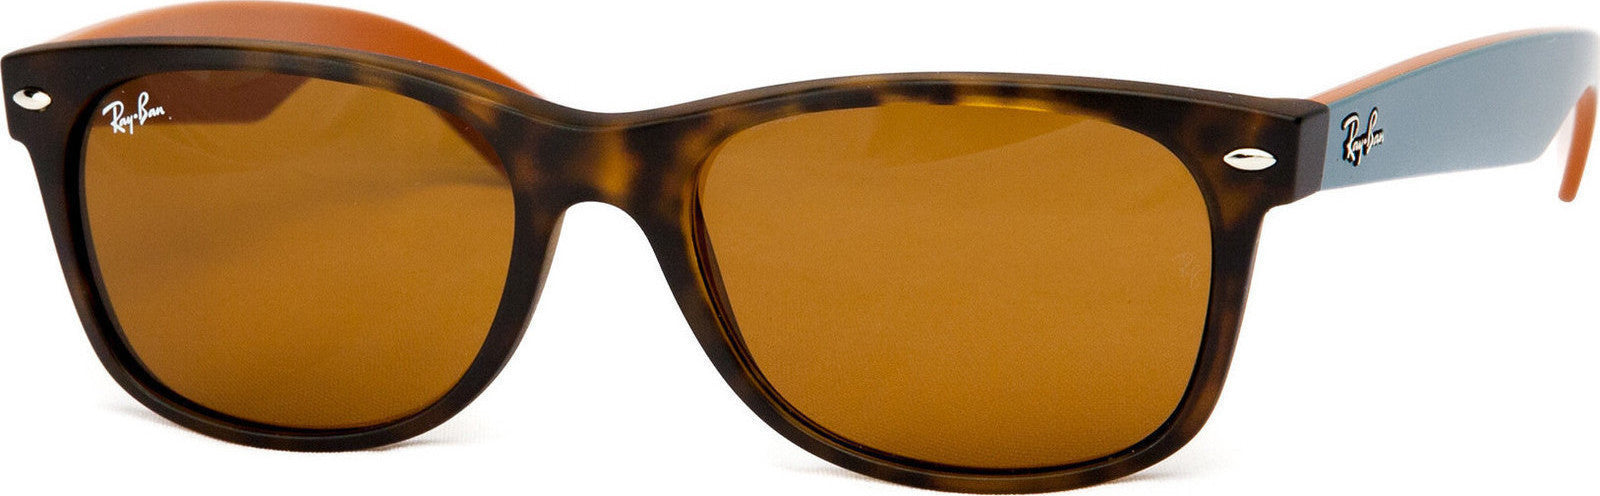 Ray-Ban New Wayfarer Bicolor Matte Havana Sunglasses - Flight Sunglasses